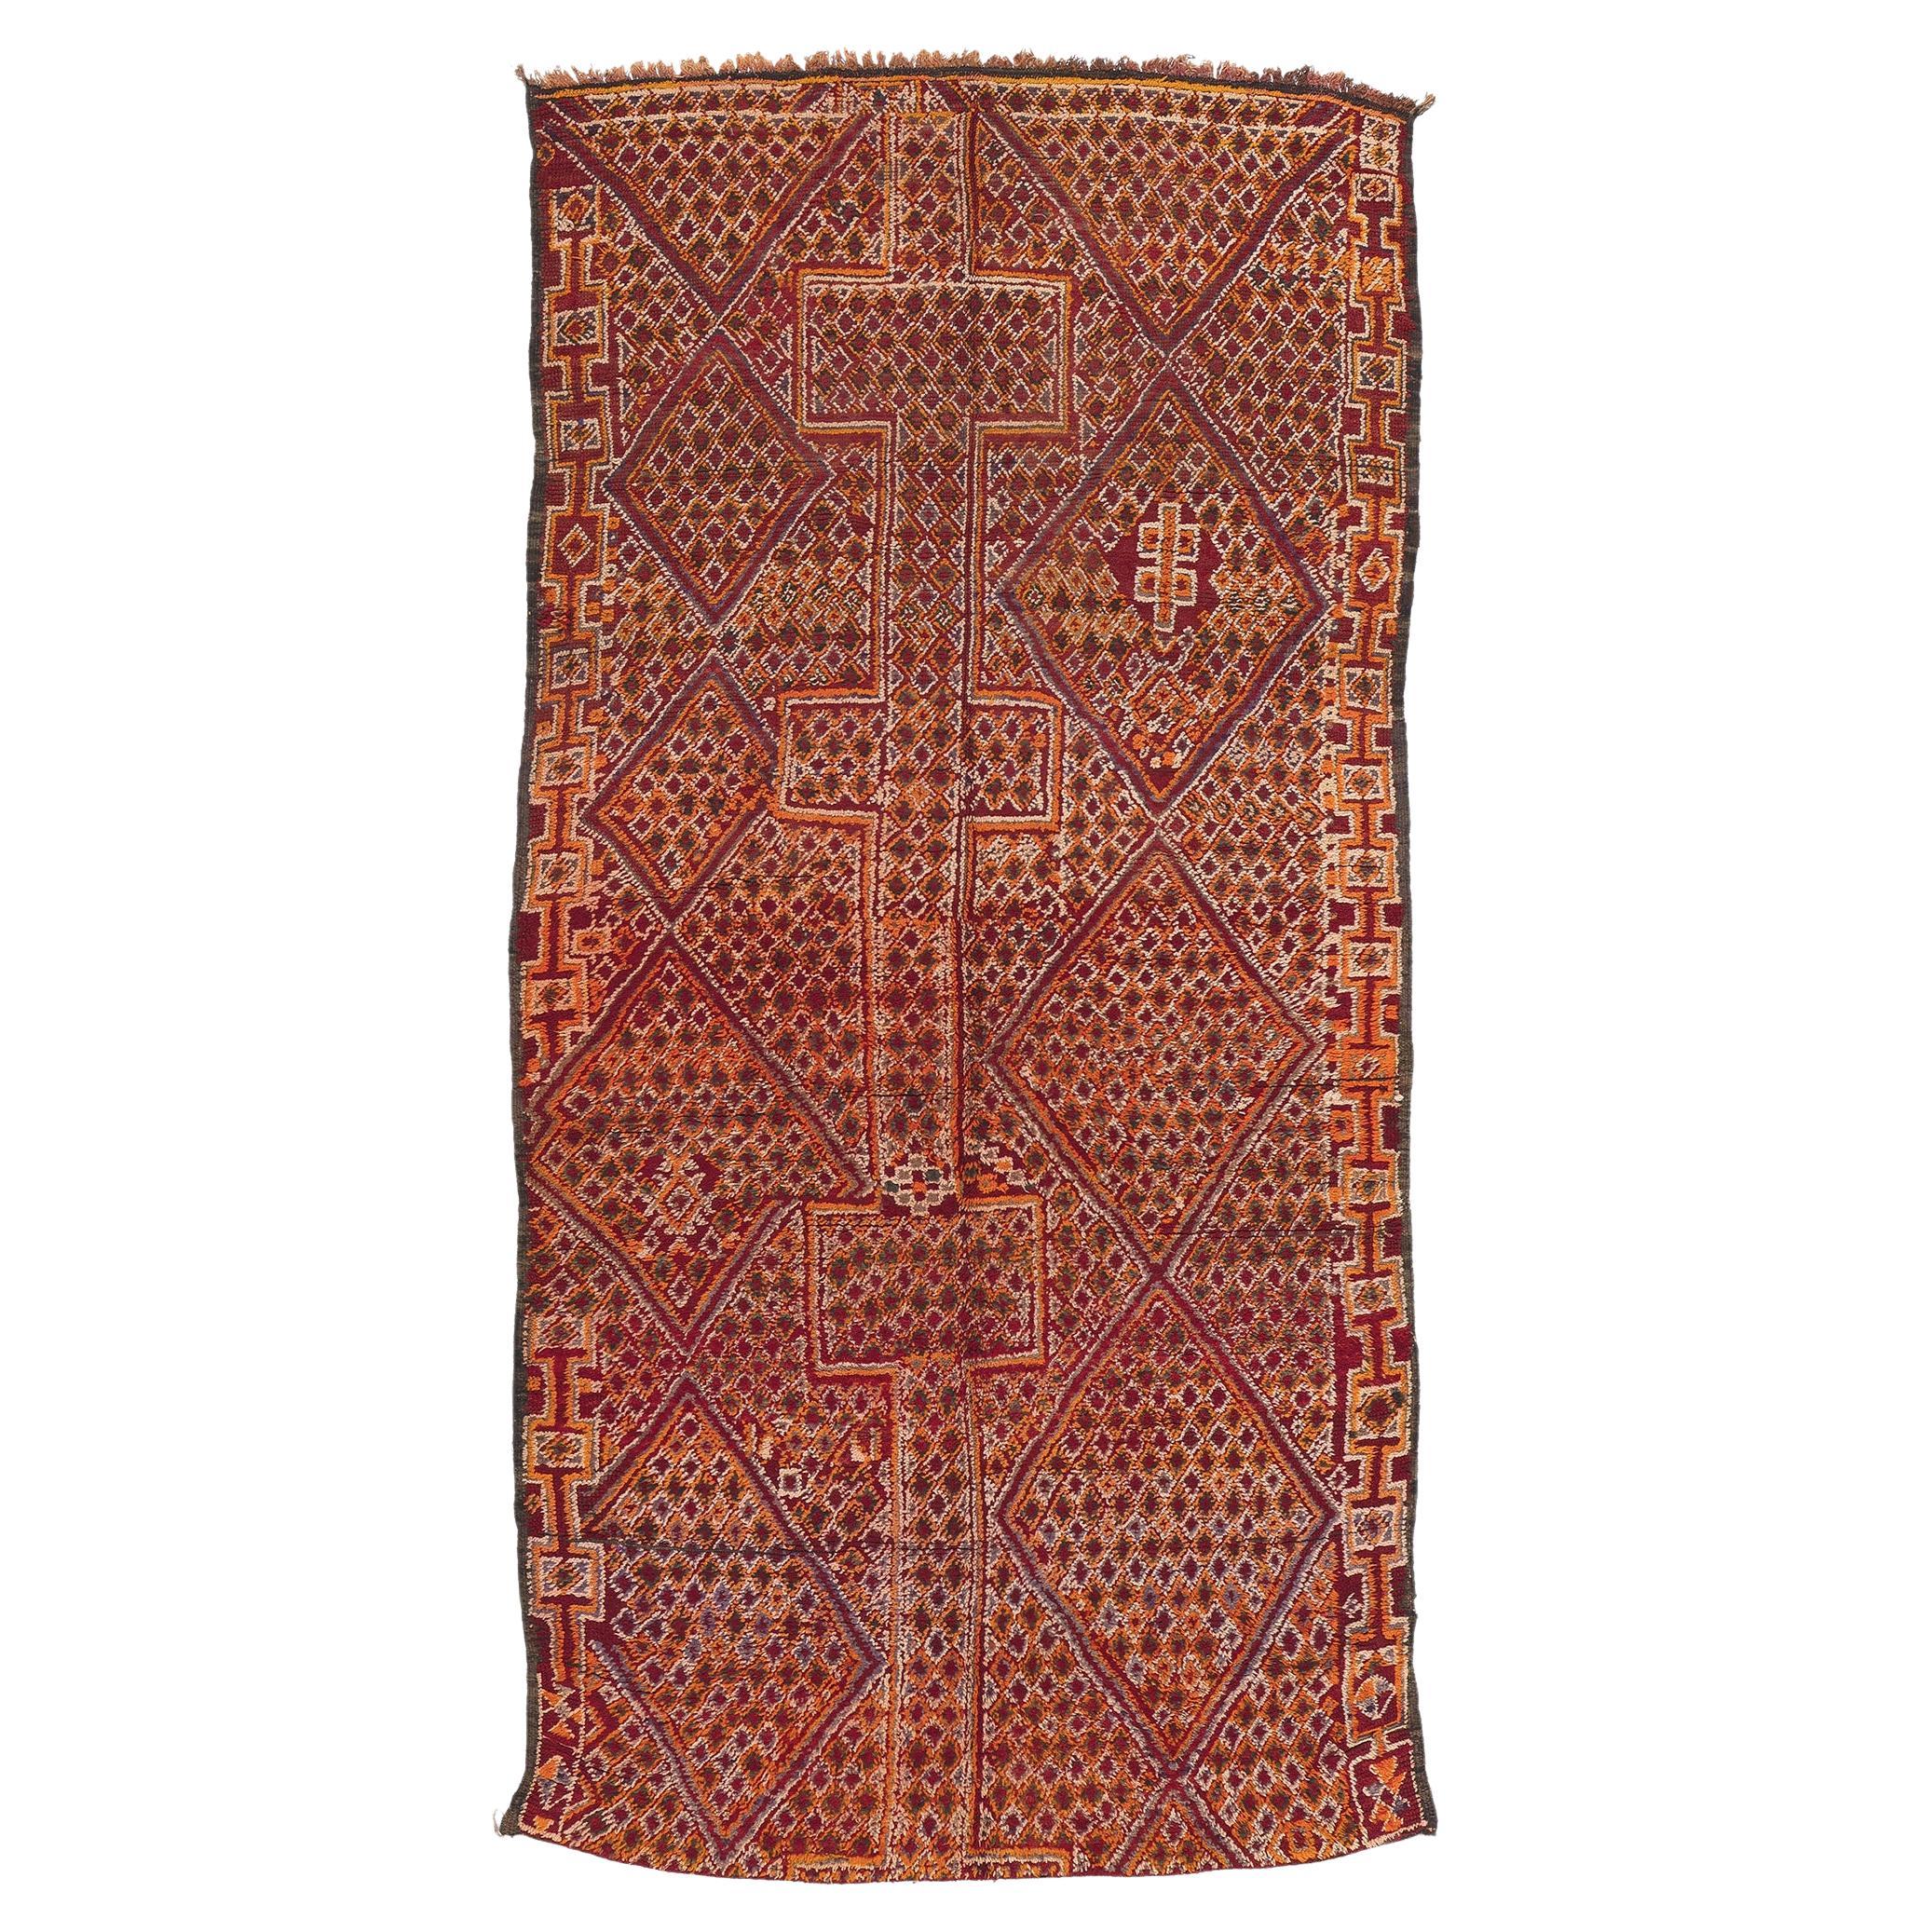 Vintage Beni MGuild Moroccan Rug, Irresistibly Chic Meets Sophisticated Boho For Sale